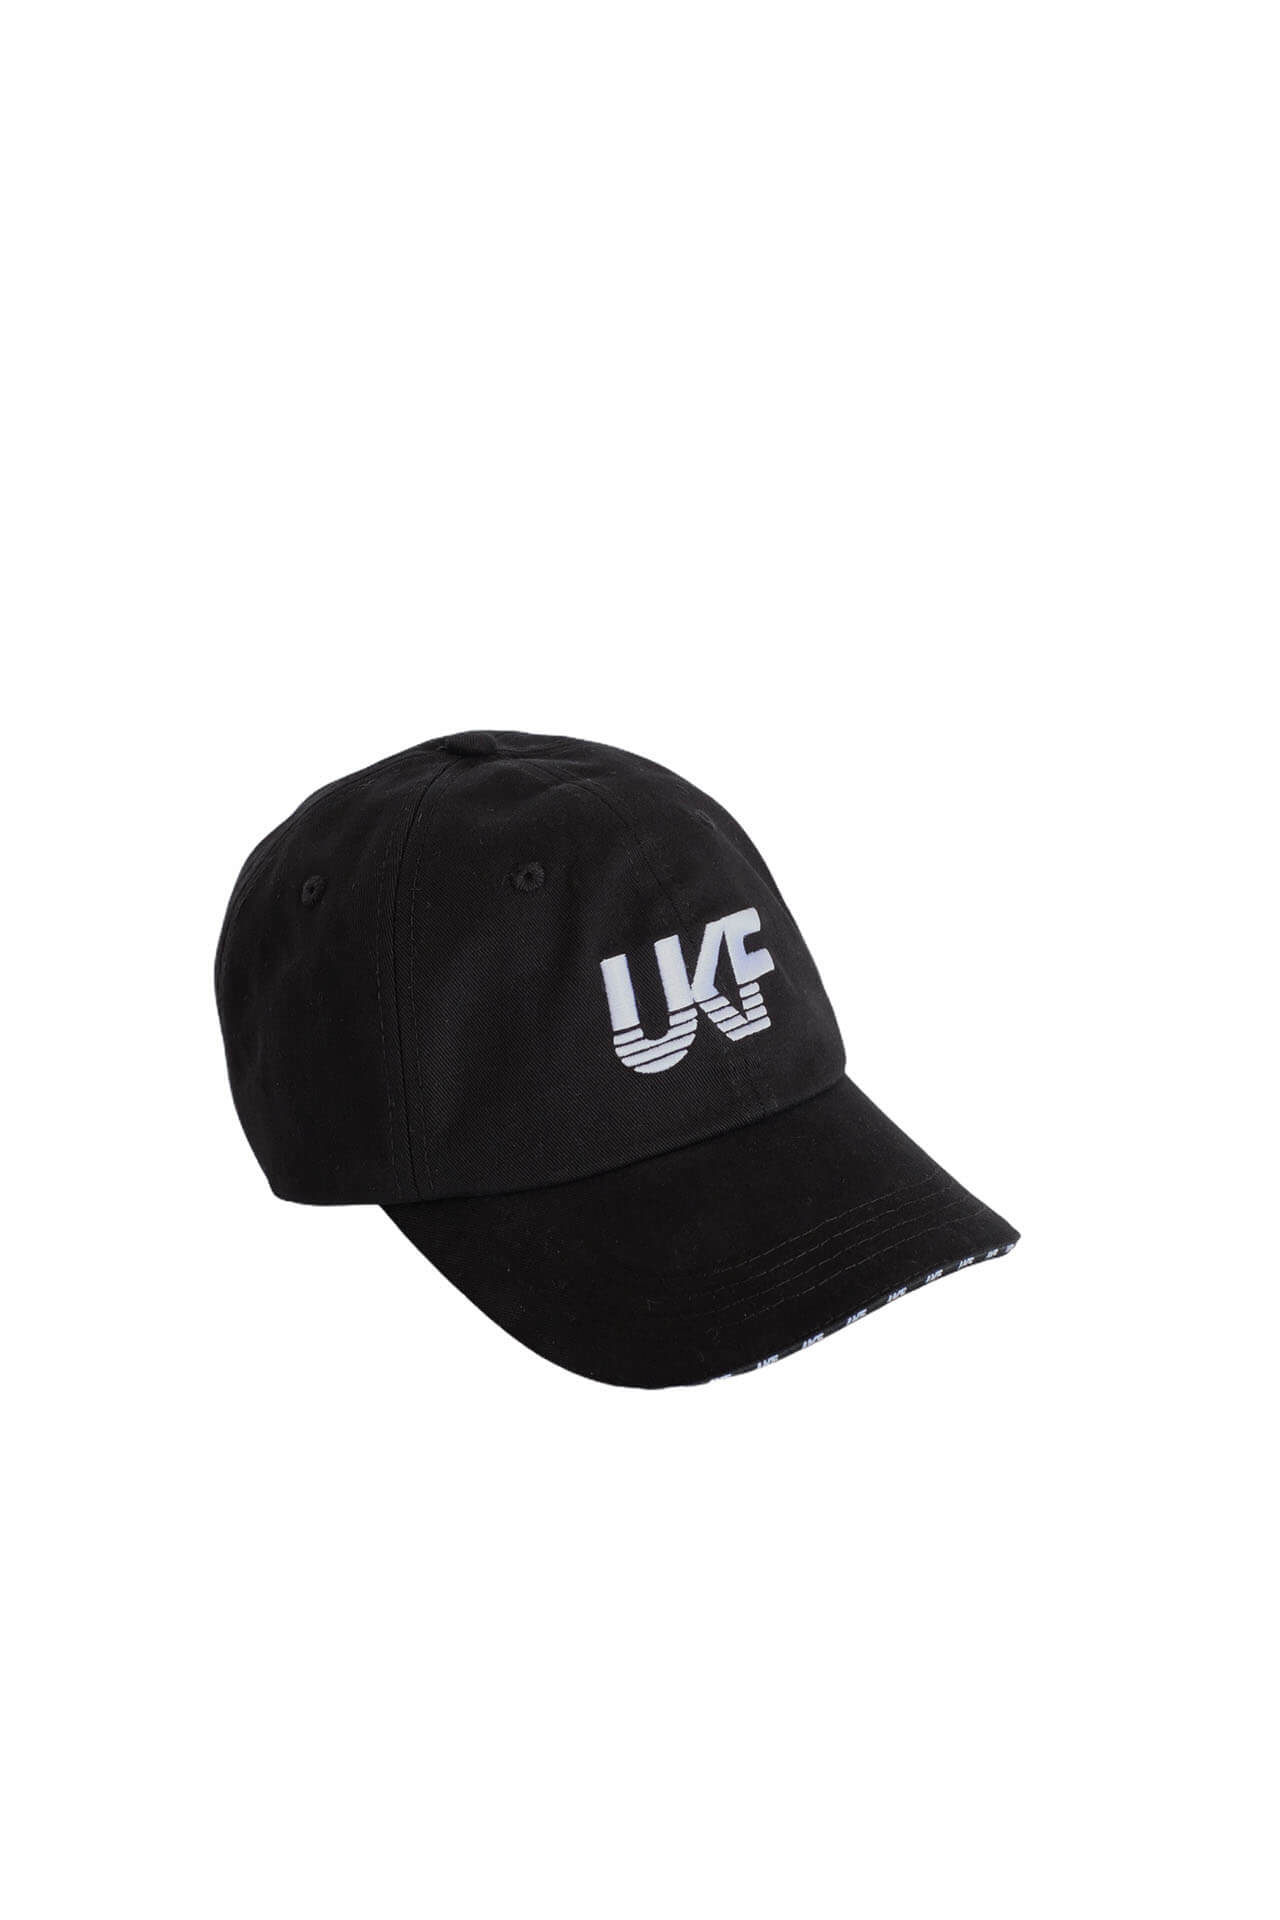 UKF Vintage Cap